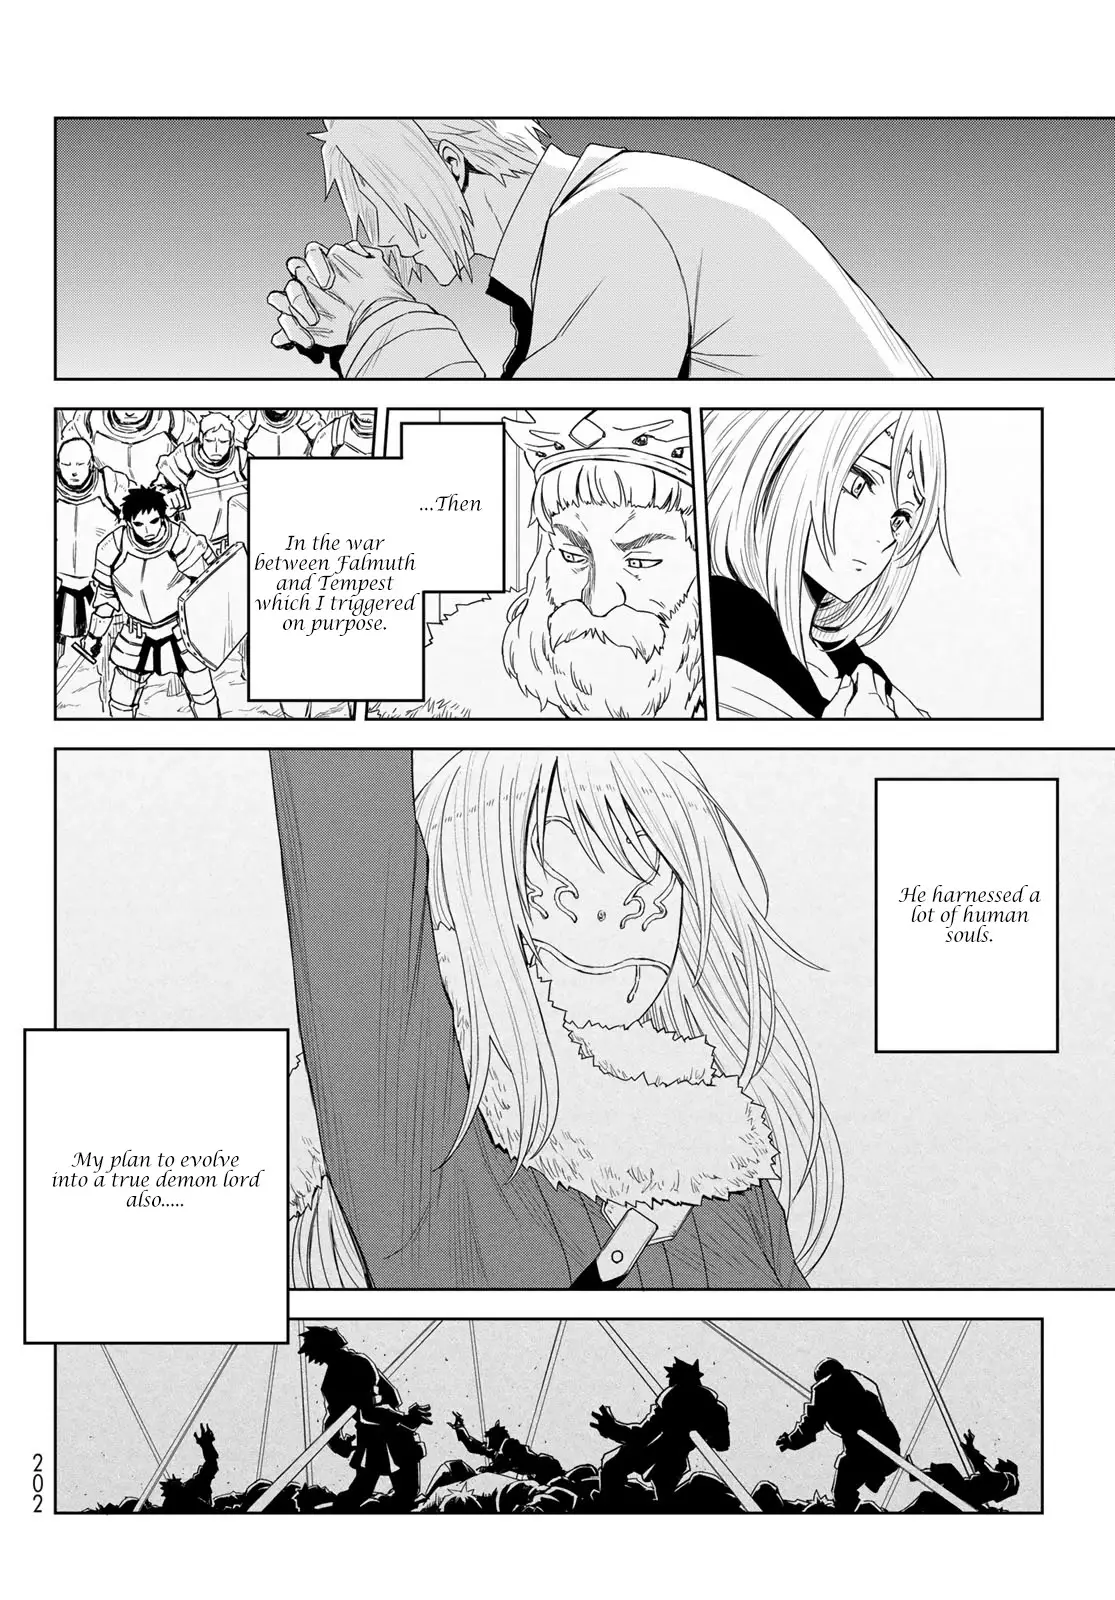 Tensei Shitara Slime Datta Ken: Clayman Revenge - 1 page 22-7dd9decb